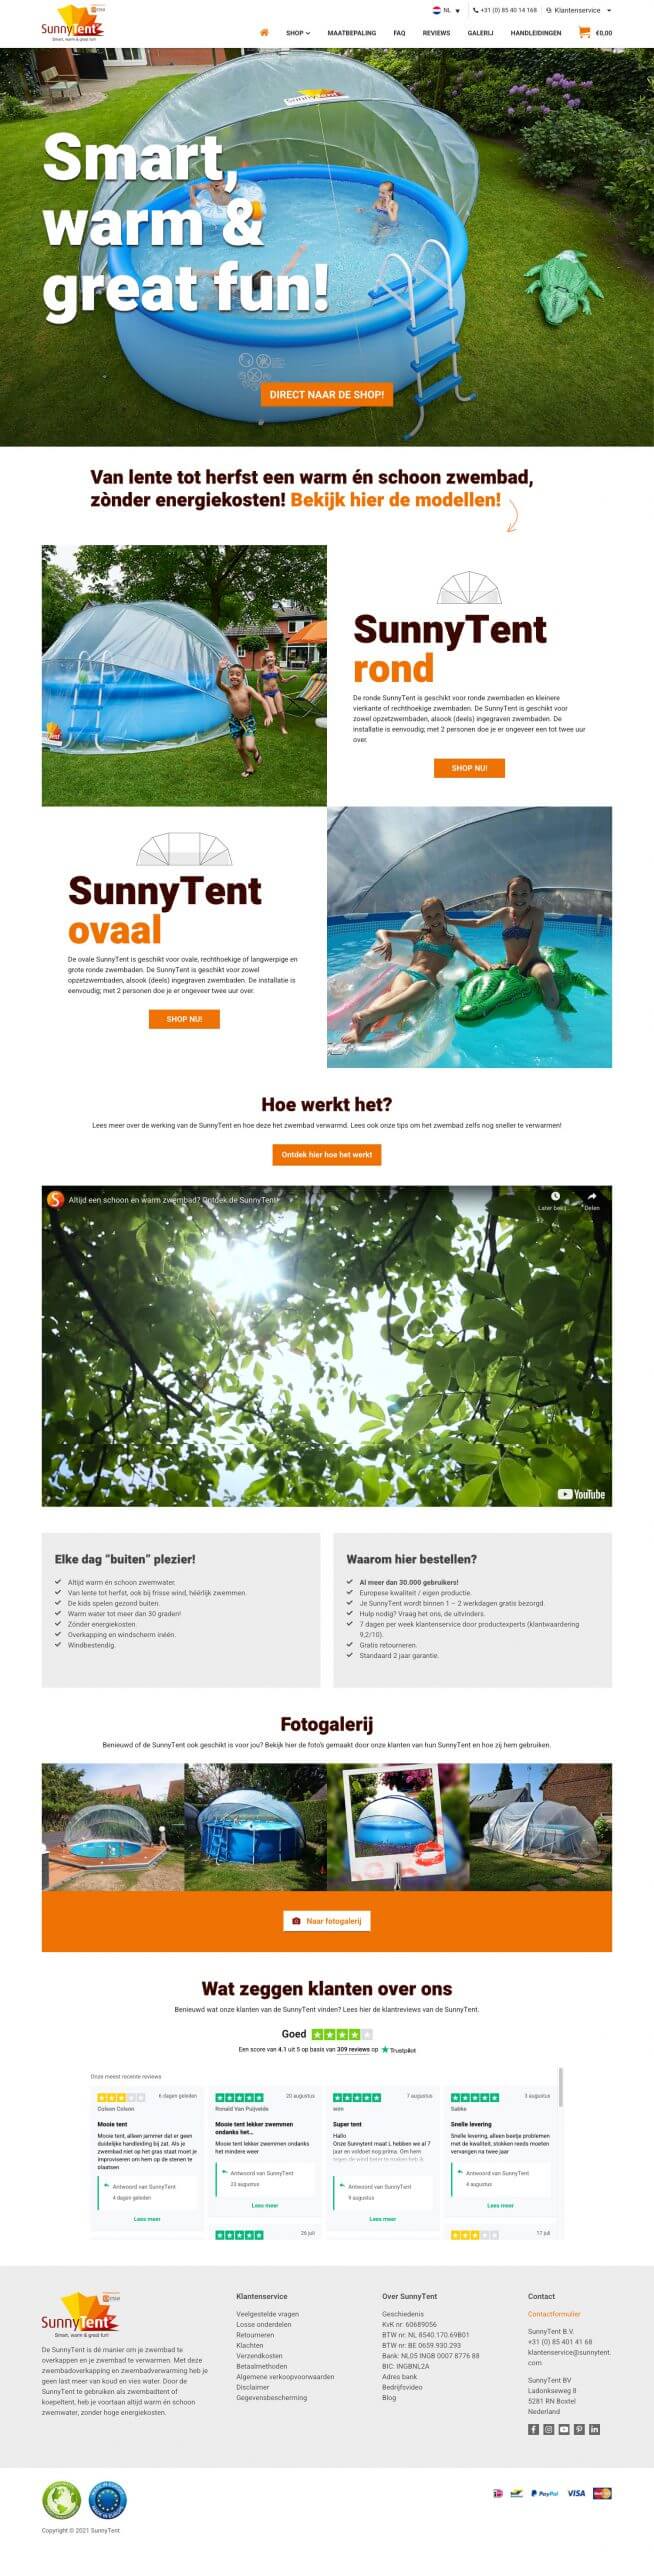 Website homepage SunnyTent